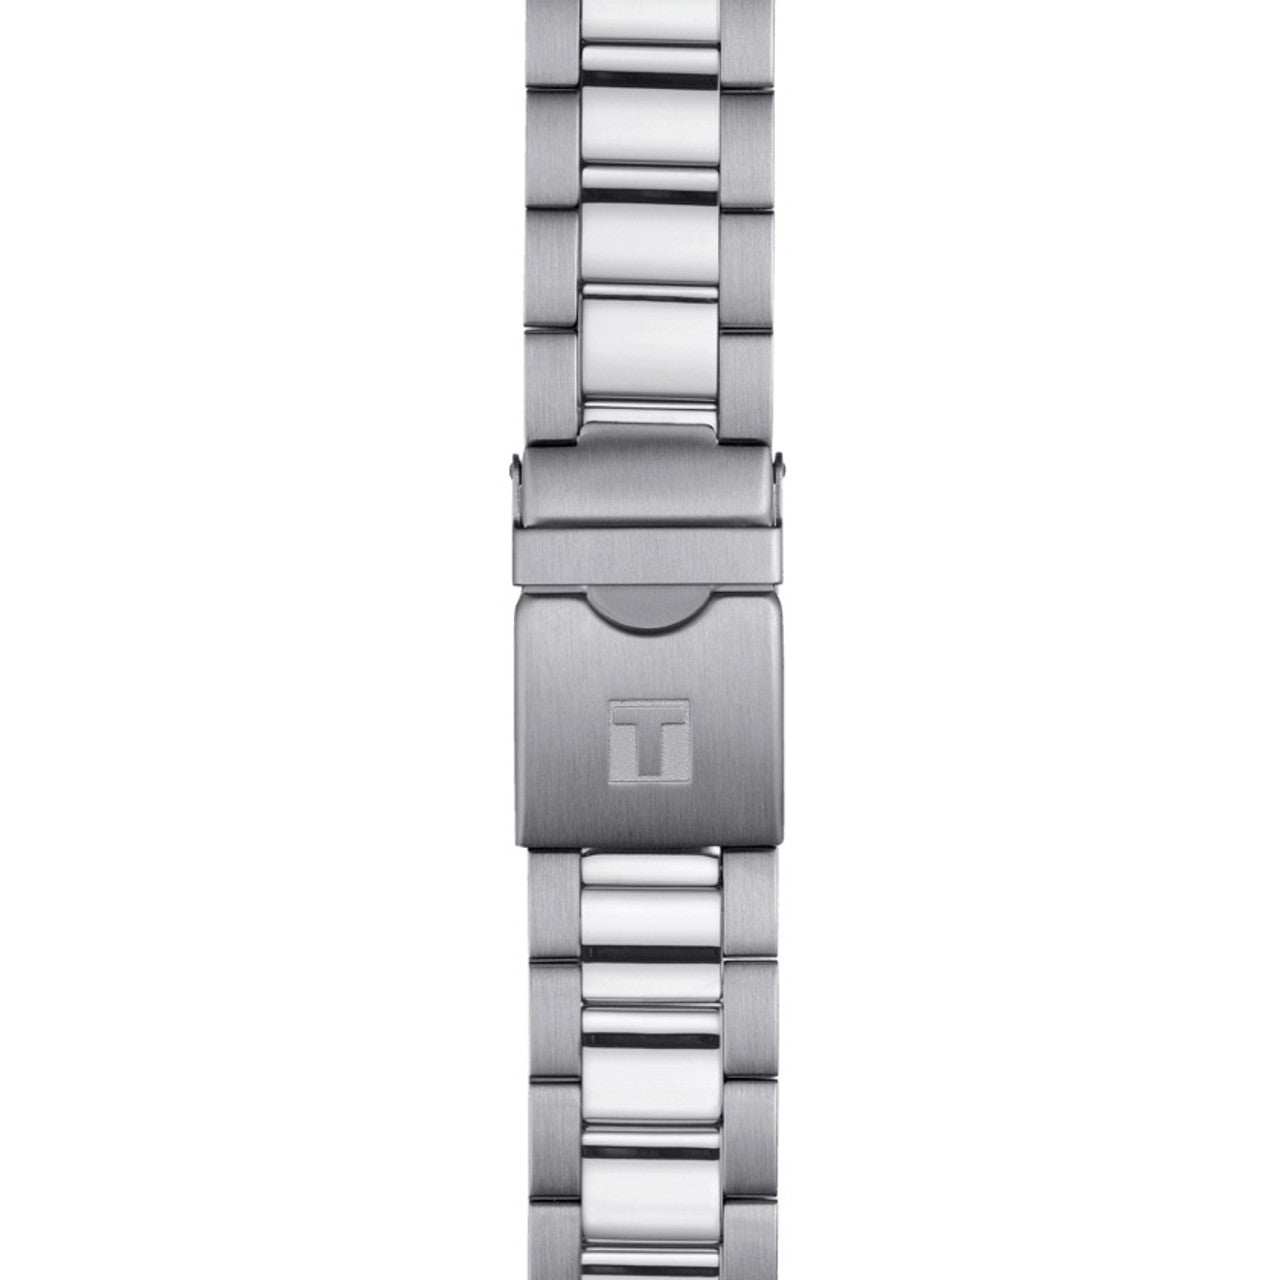 Tissot Seaster 1000 Chronograph Quartz Black Dial Silver Steel Strap Watch For Men - T120.417.11.051.00